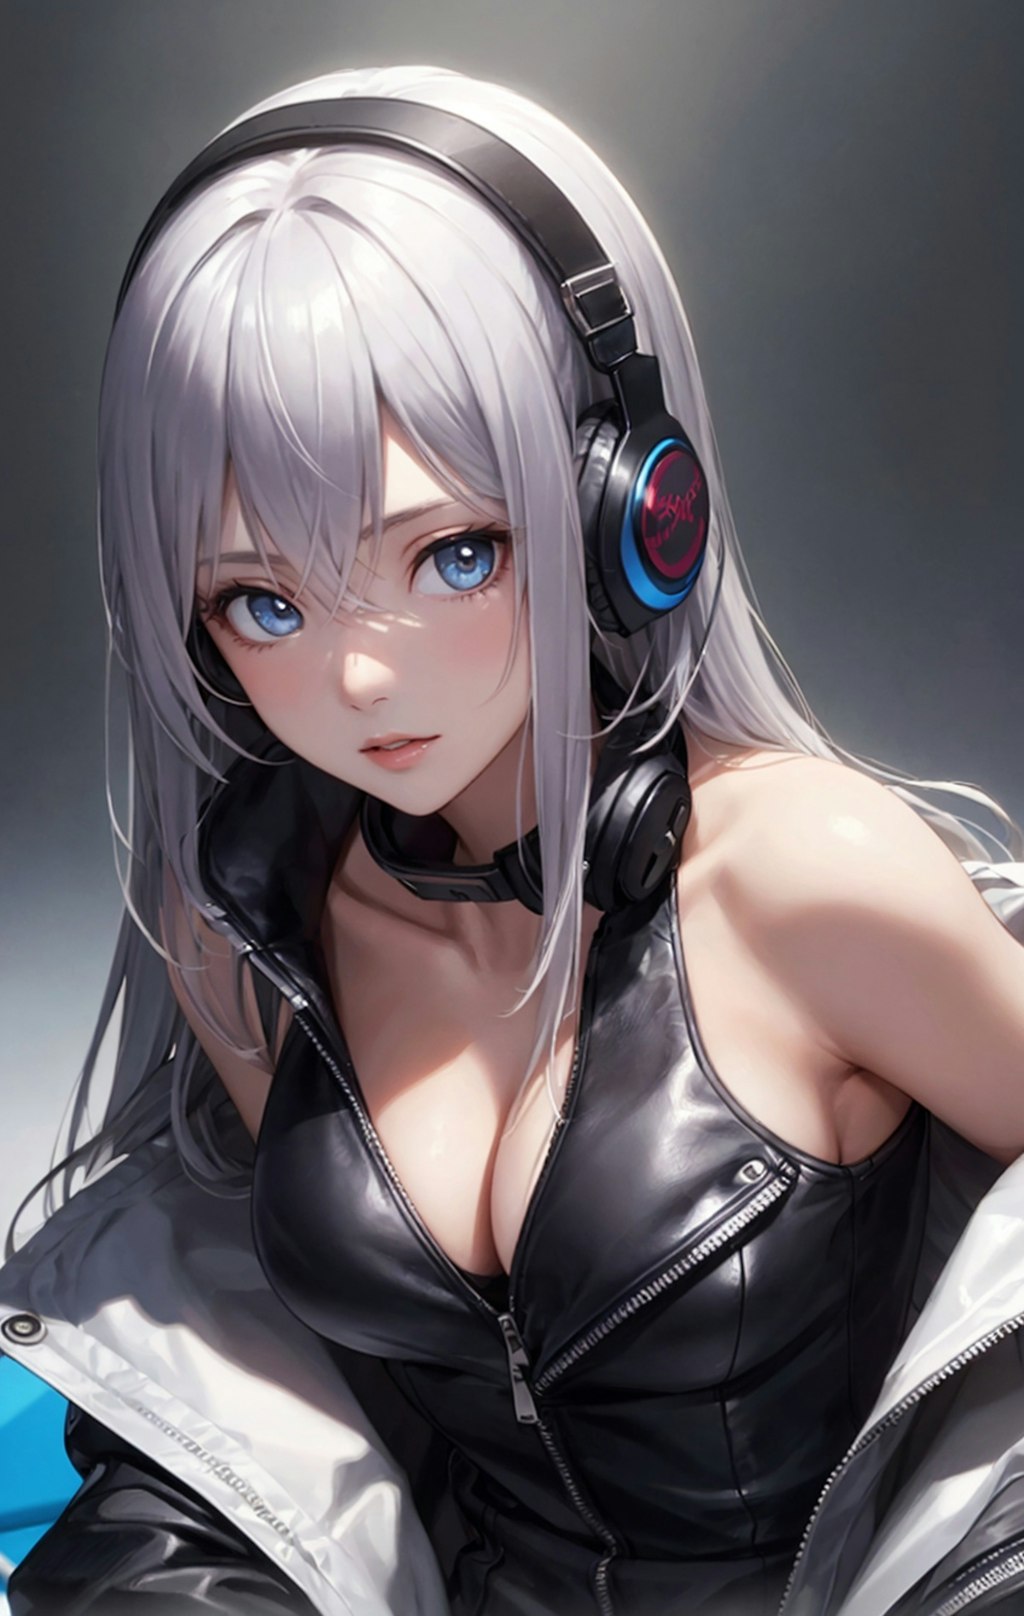 headphone girl